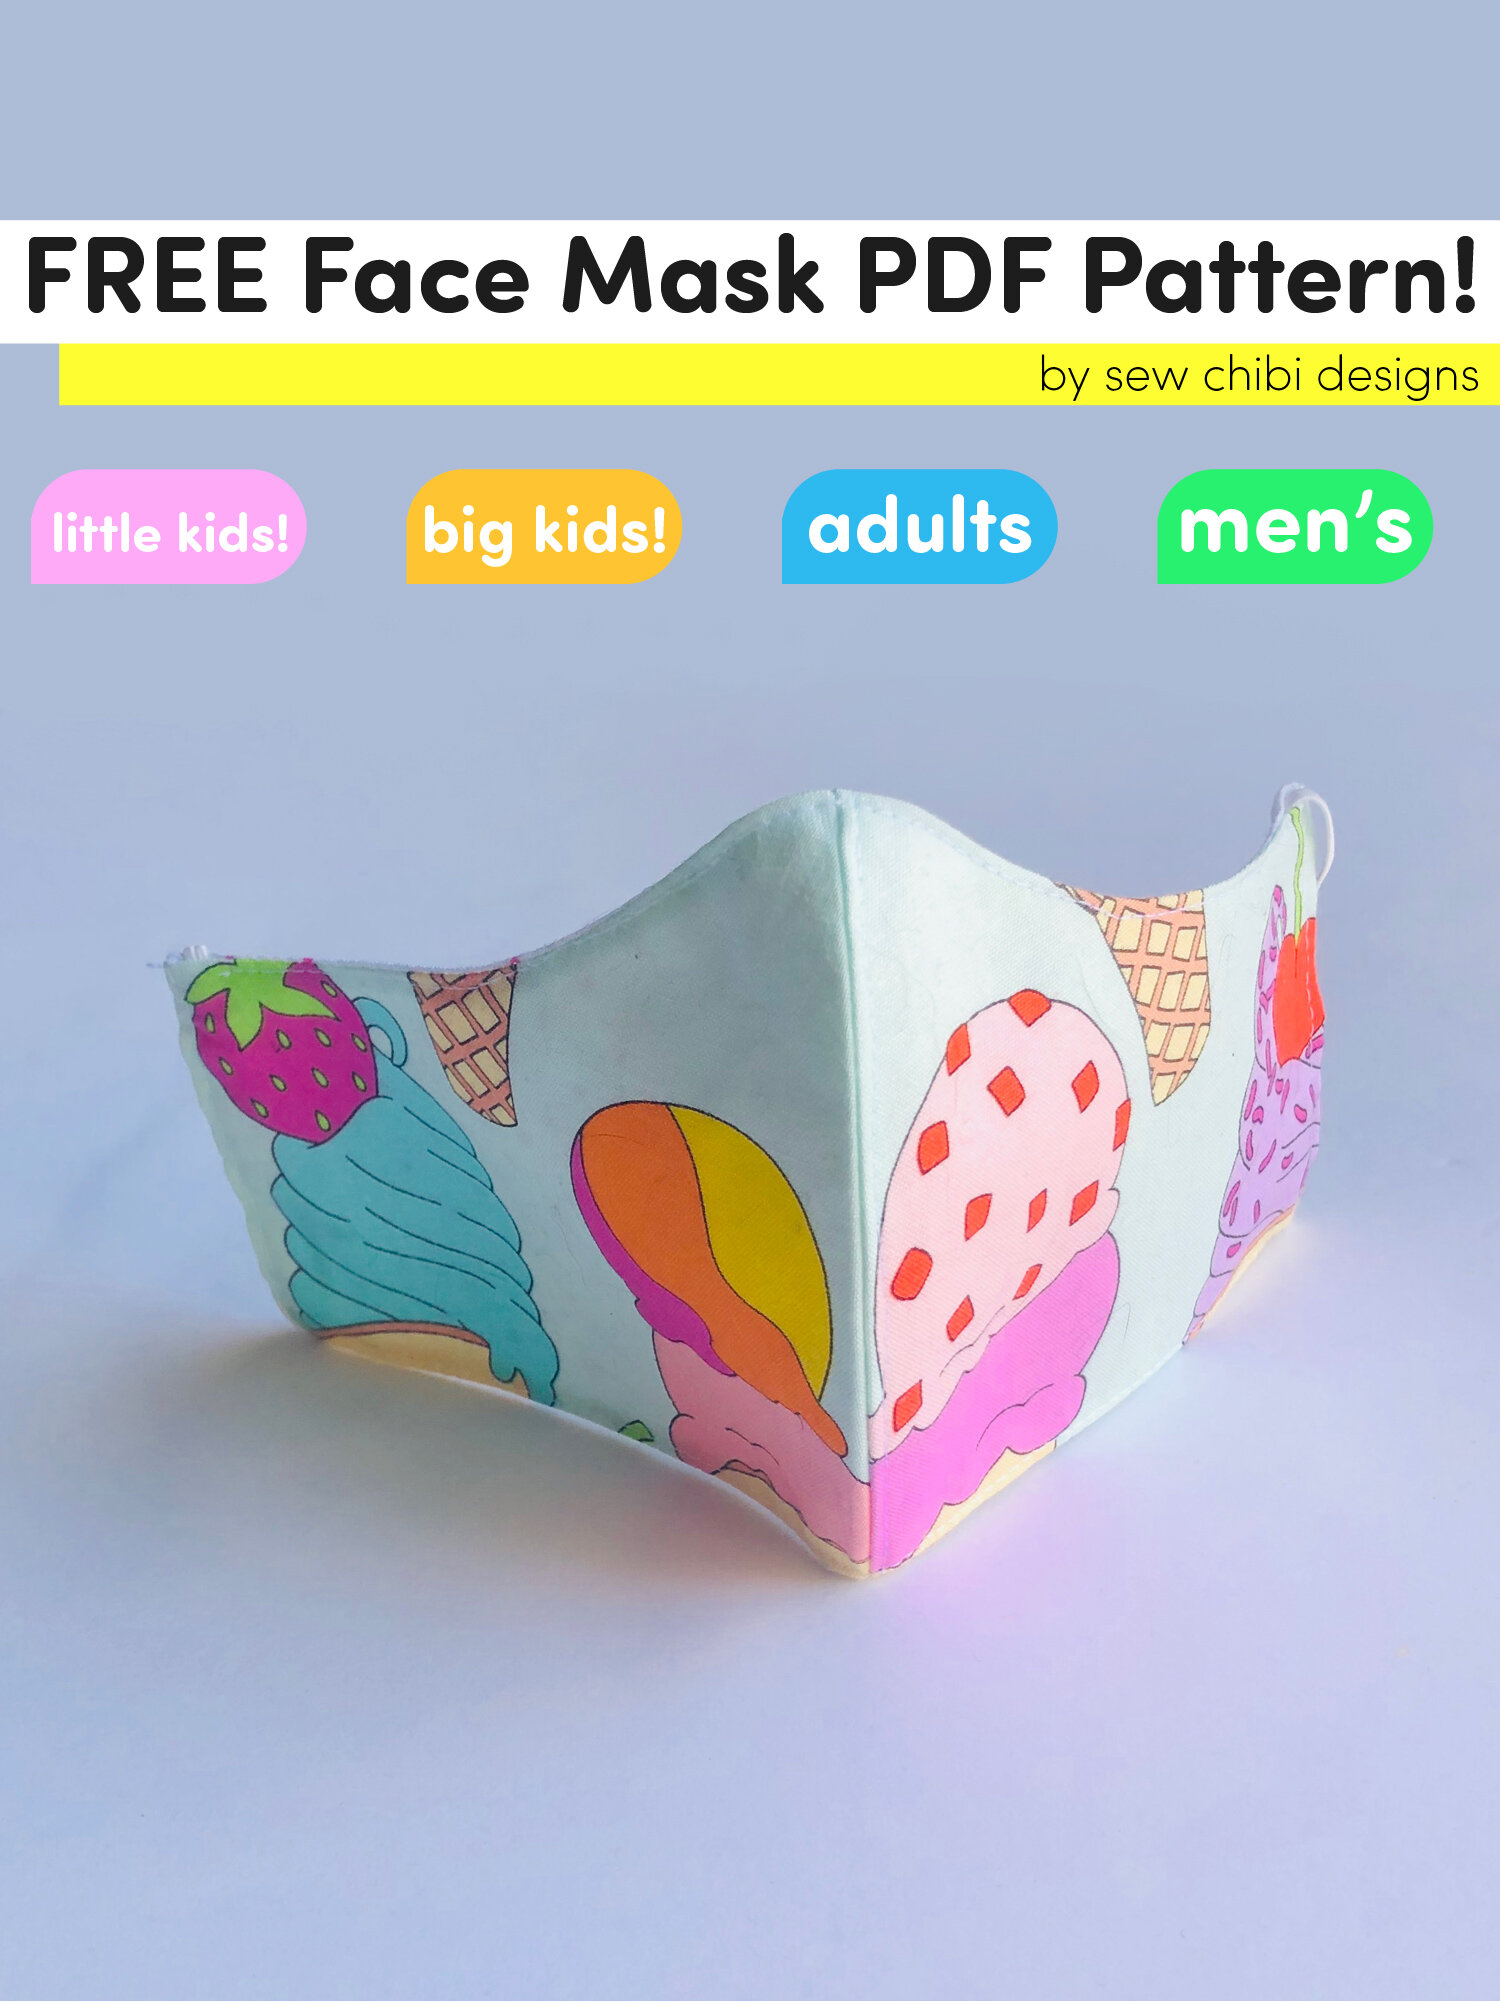 Star Wars Inspired Face Masks Sew Chibi Designs